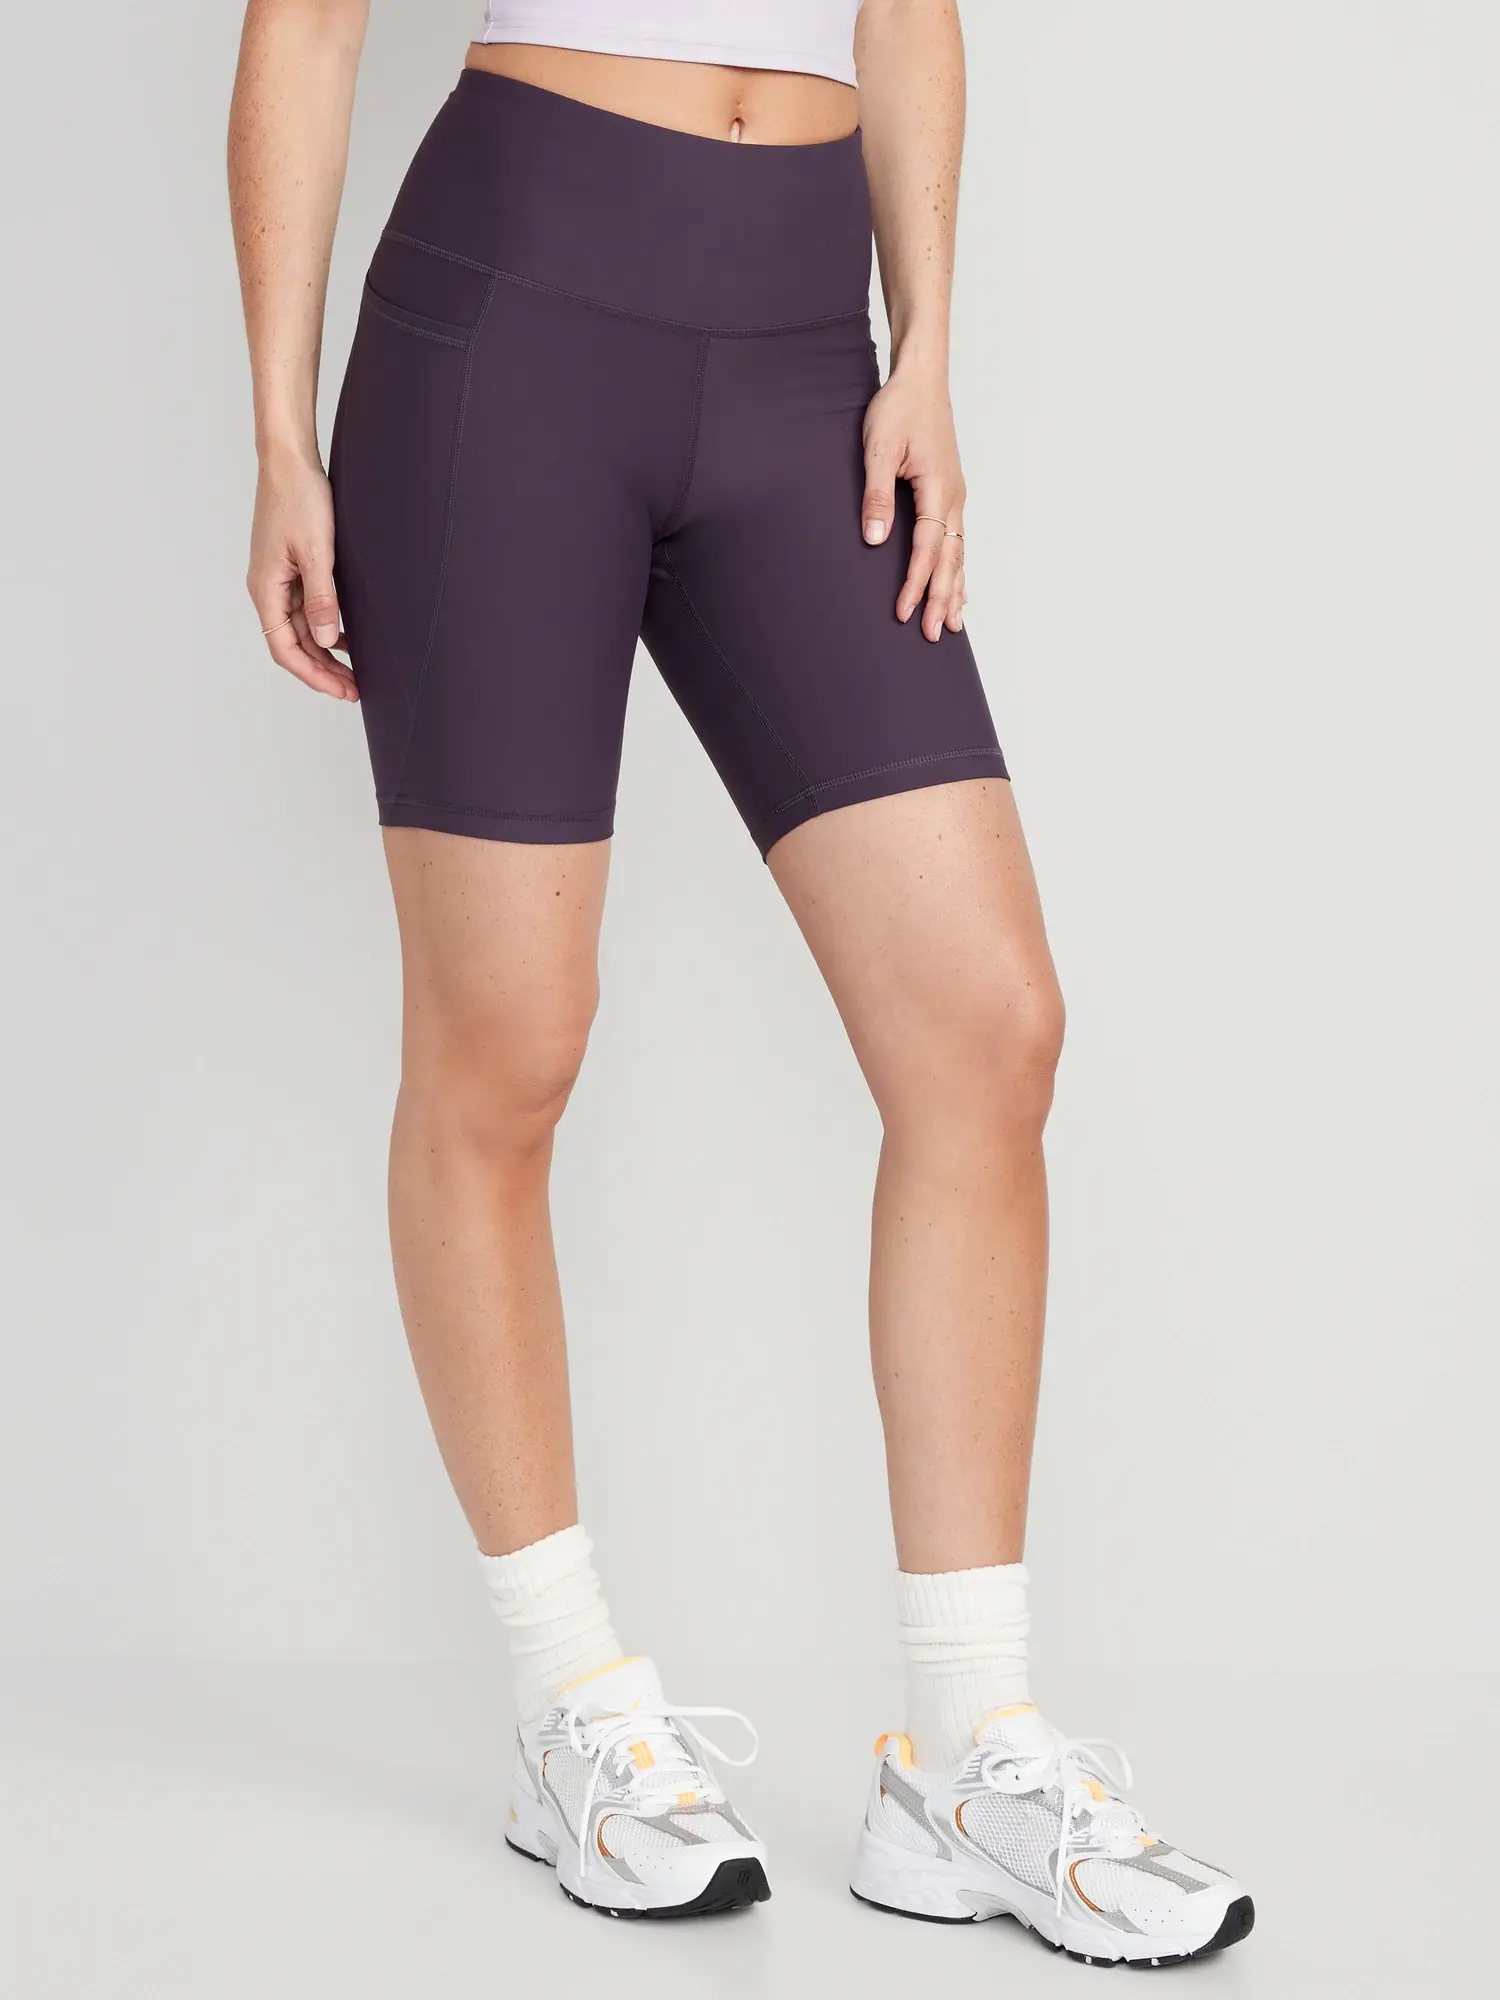 Old Navy High-Waisted PowerSoft Biker Shorts for Women -- 8-inch inseam purple. 1